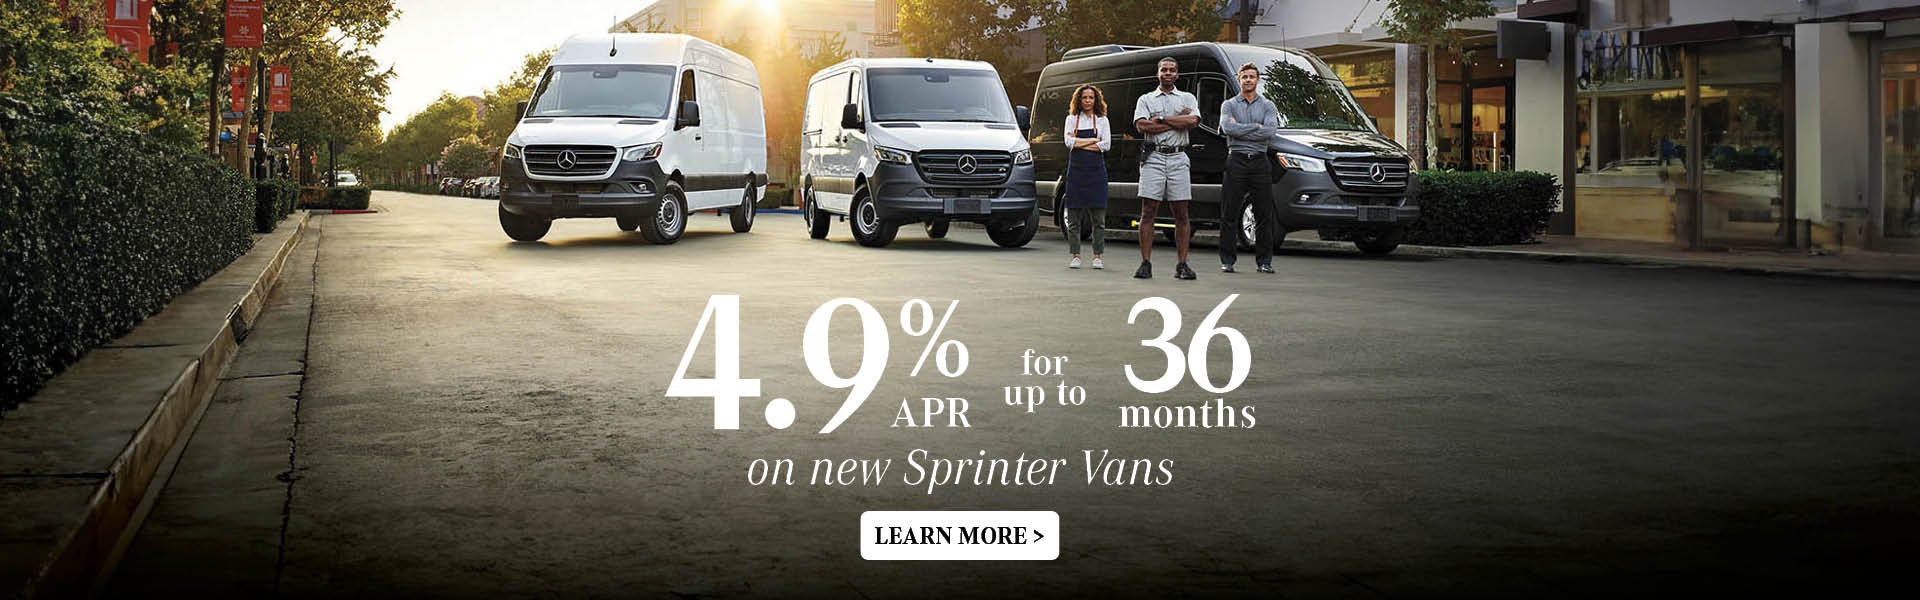 4.9% APR on New Sprinter Vans